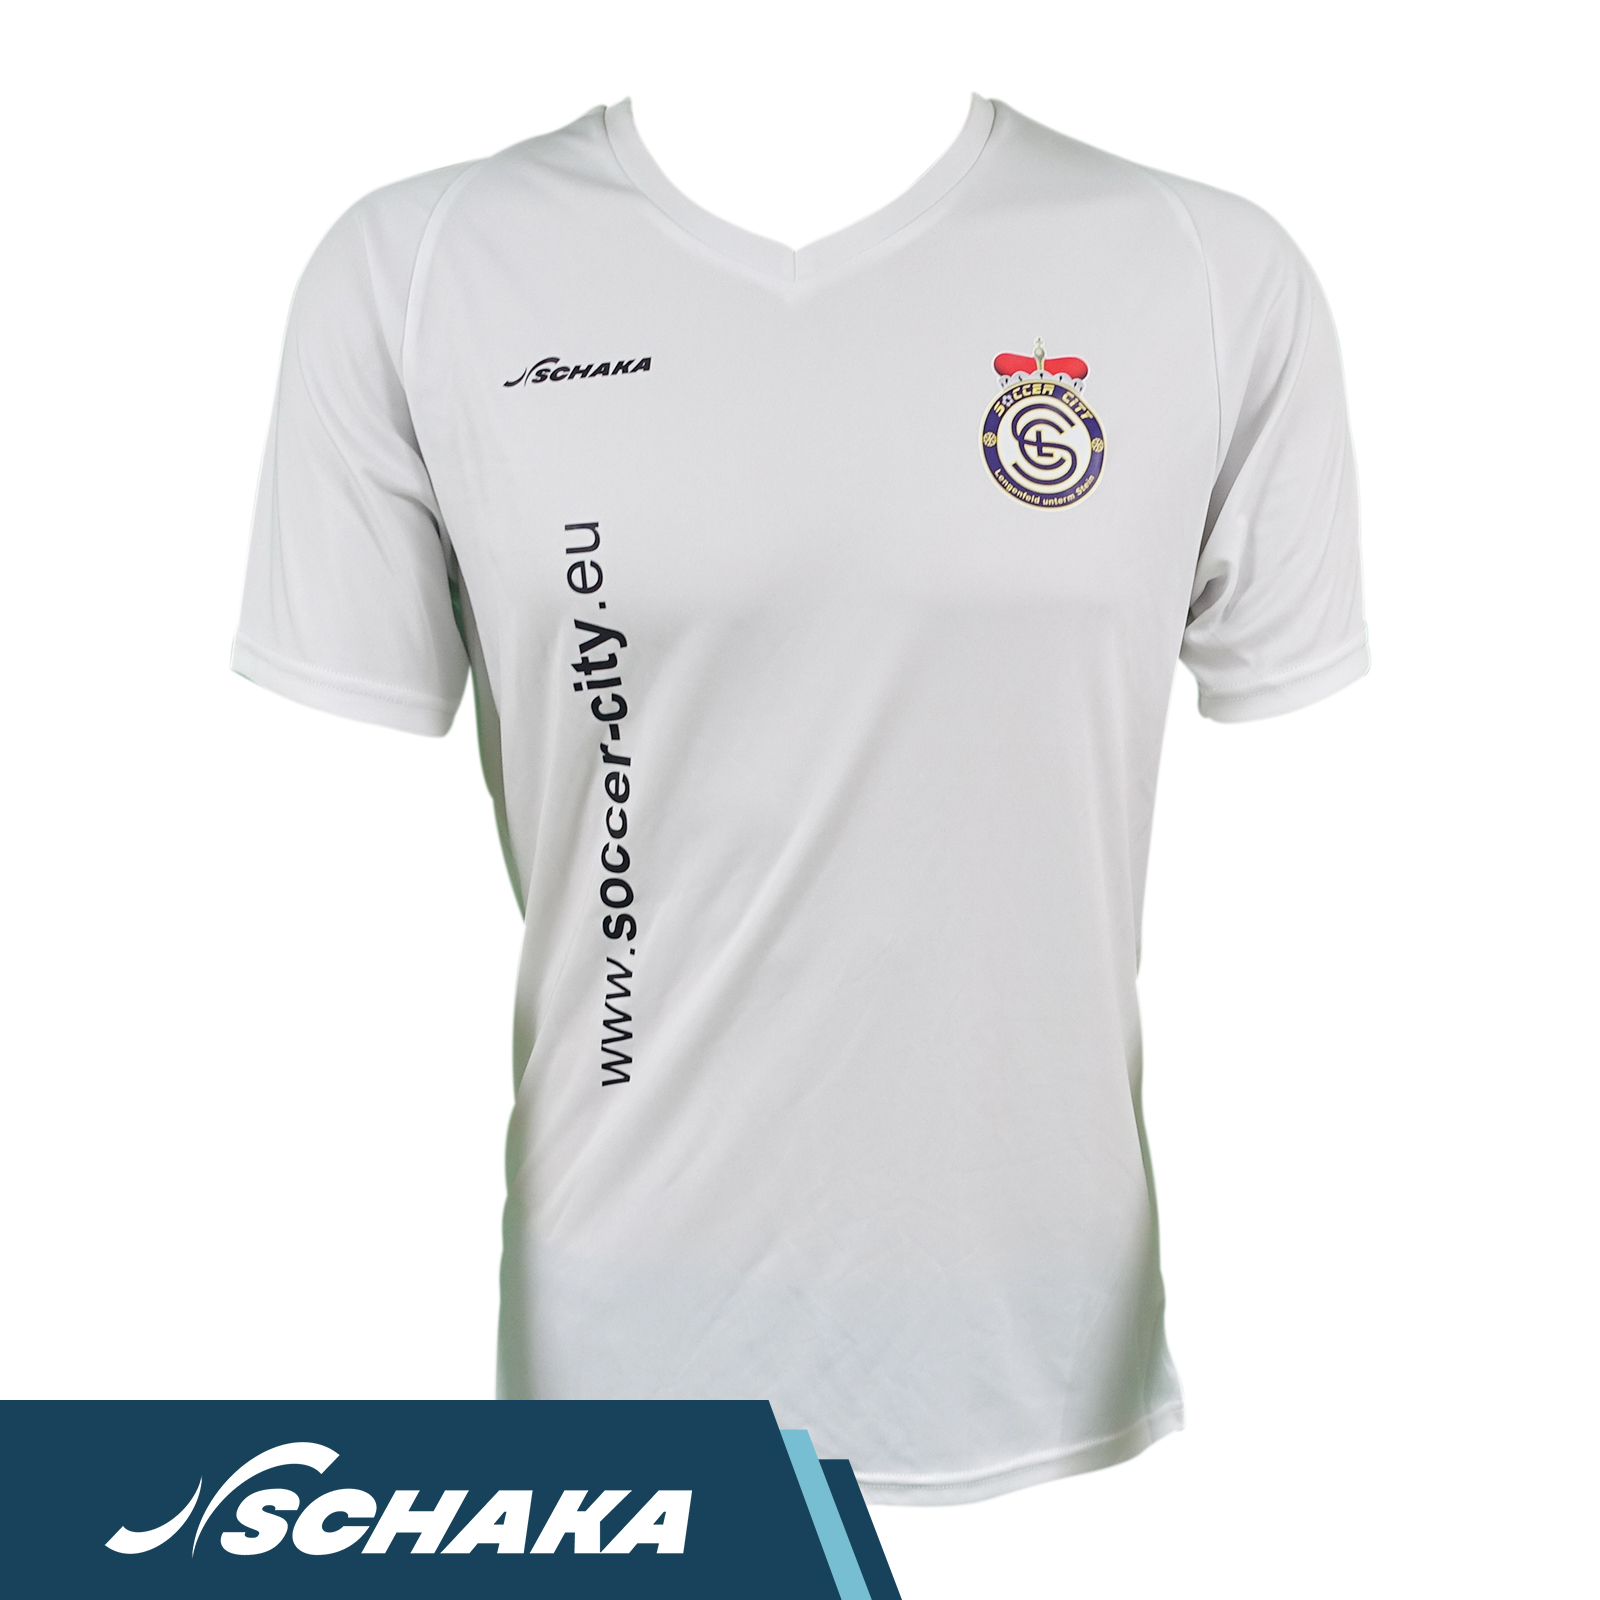 Schaka Jersey MUA Soccer City Edition